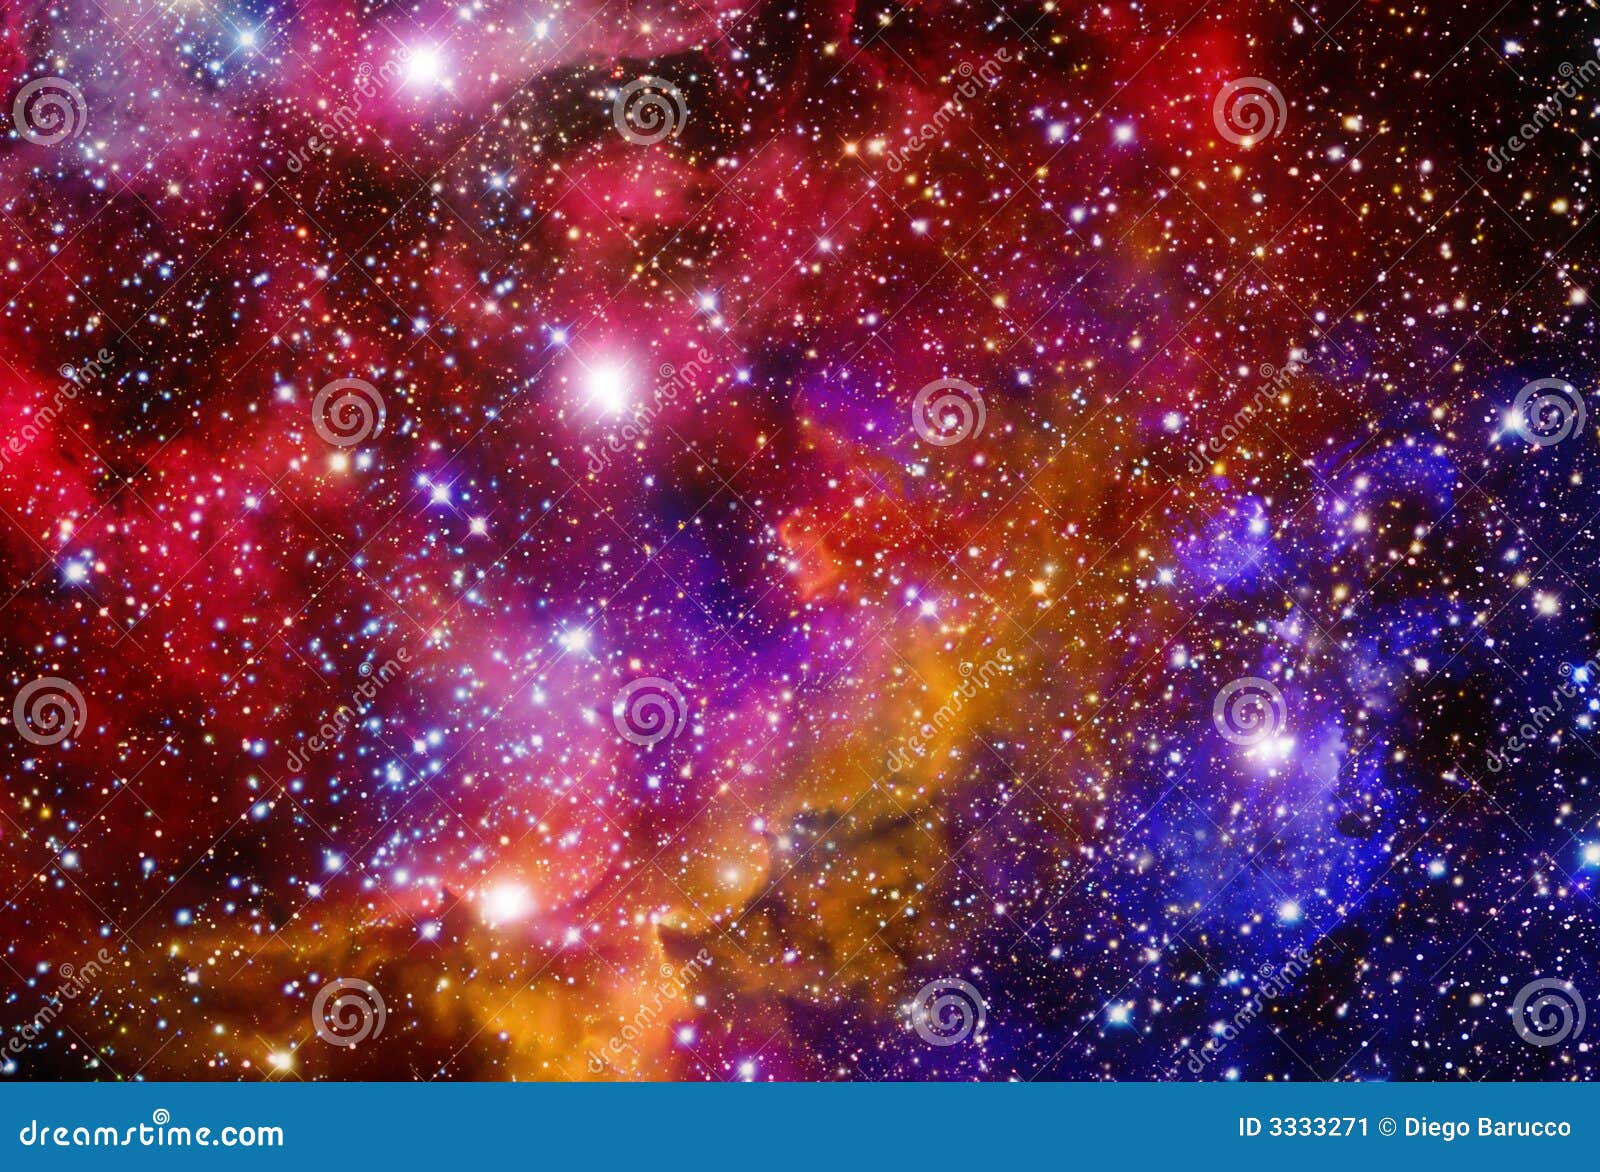 stellar field with nebulae